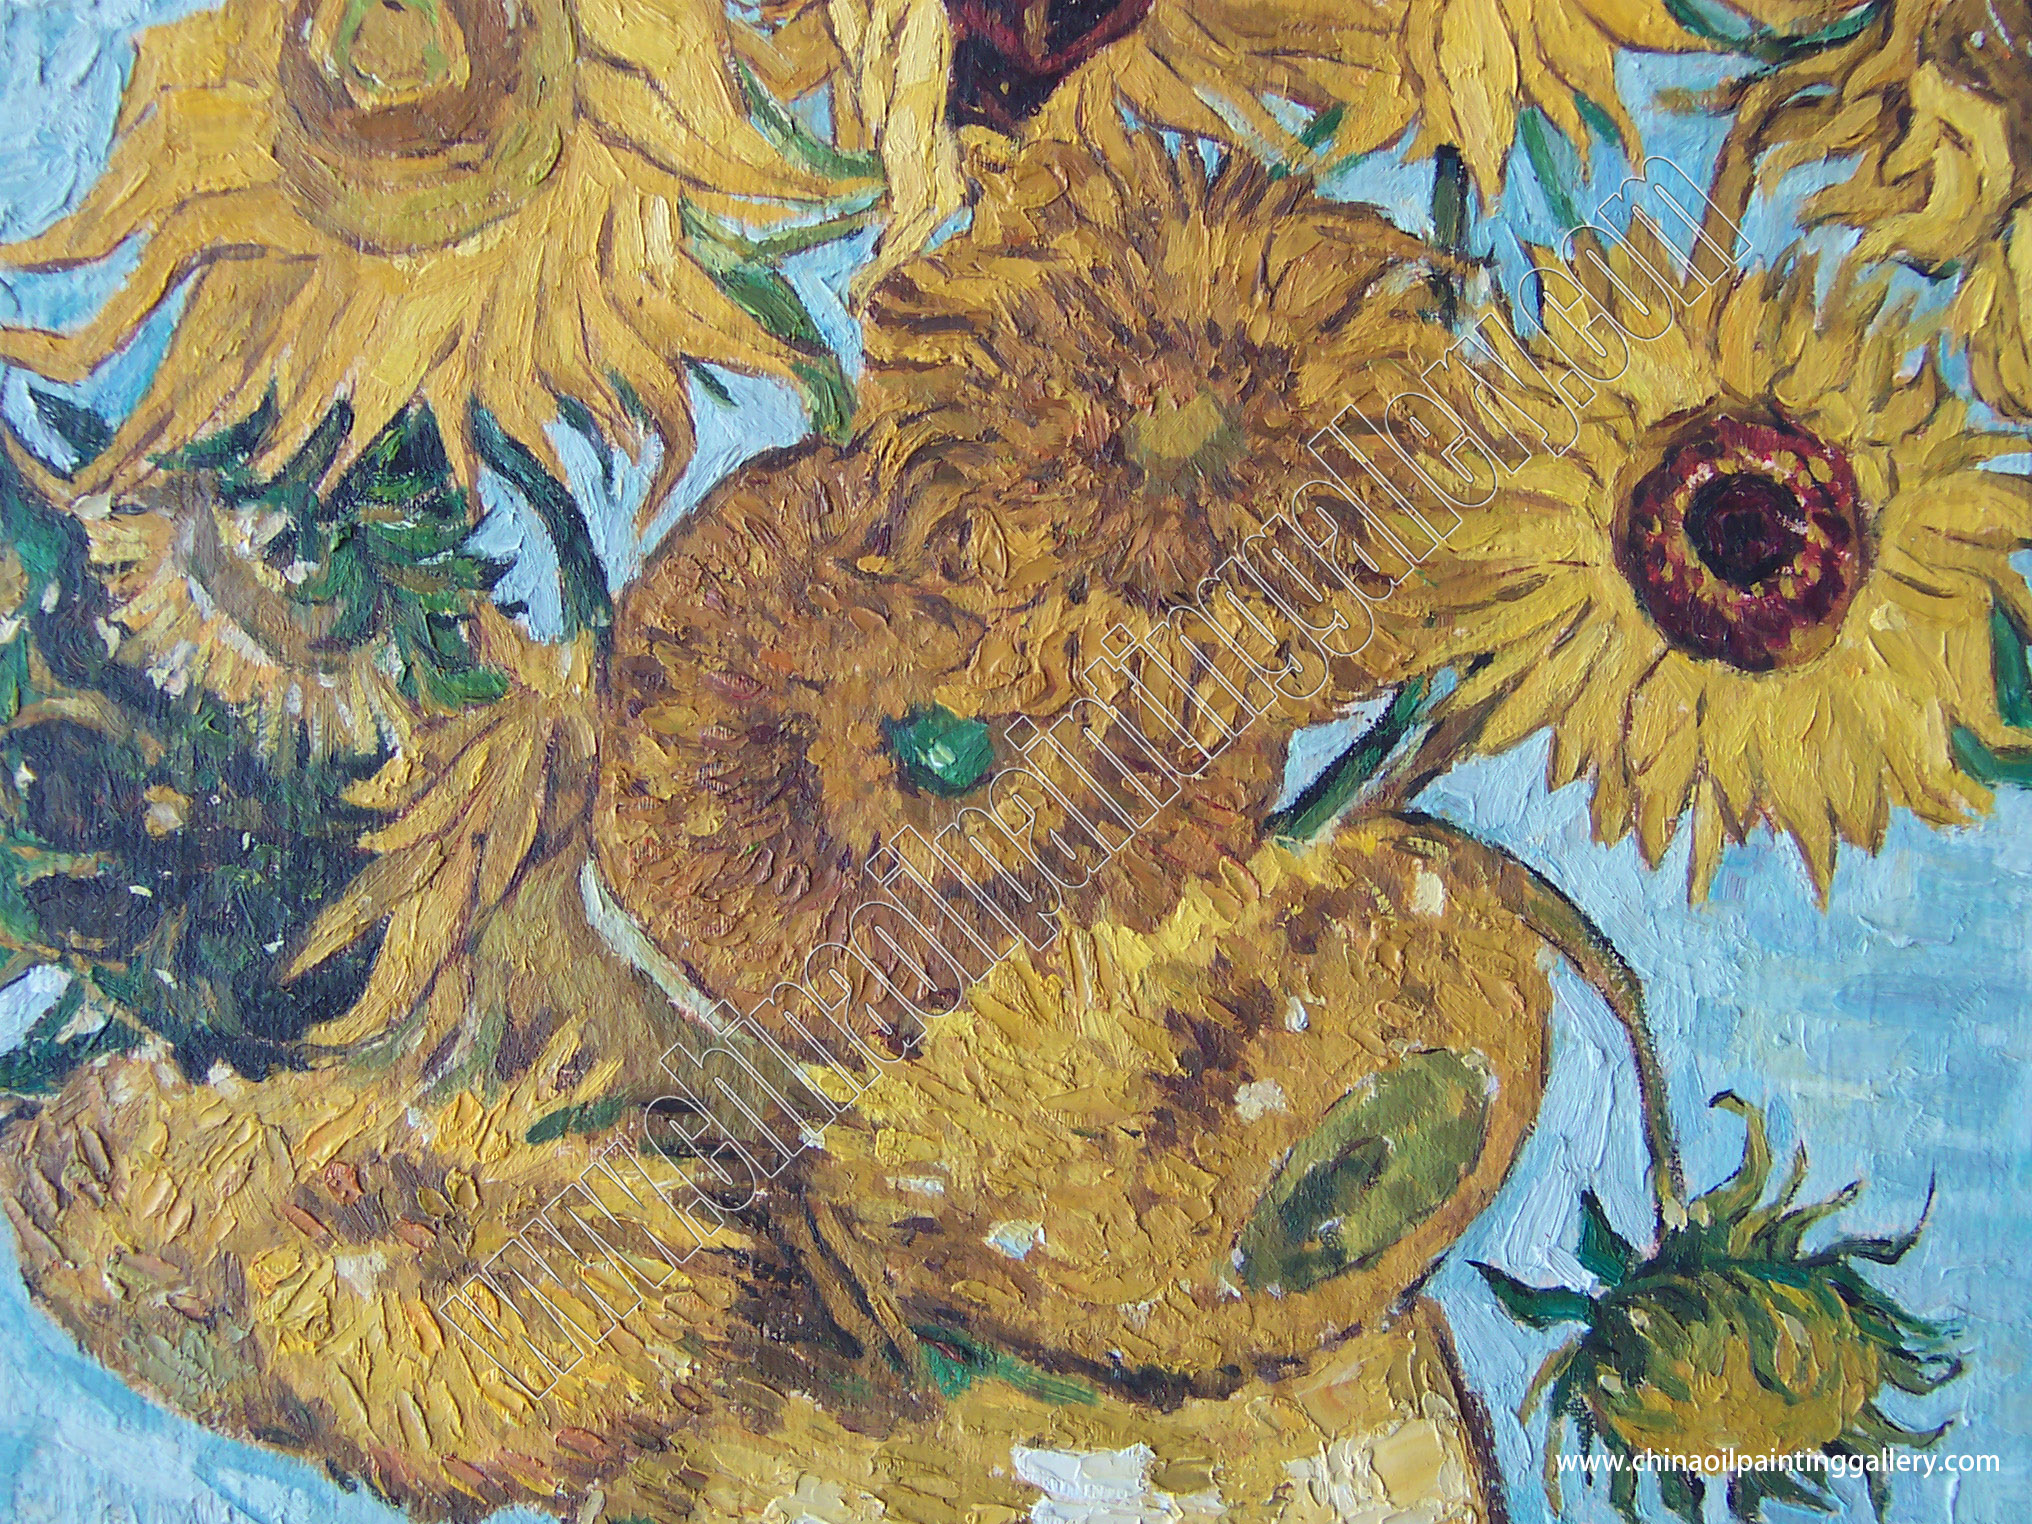 Vincent van Gogh Sunflowers - Oil painting reproductions details 7